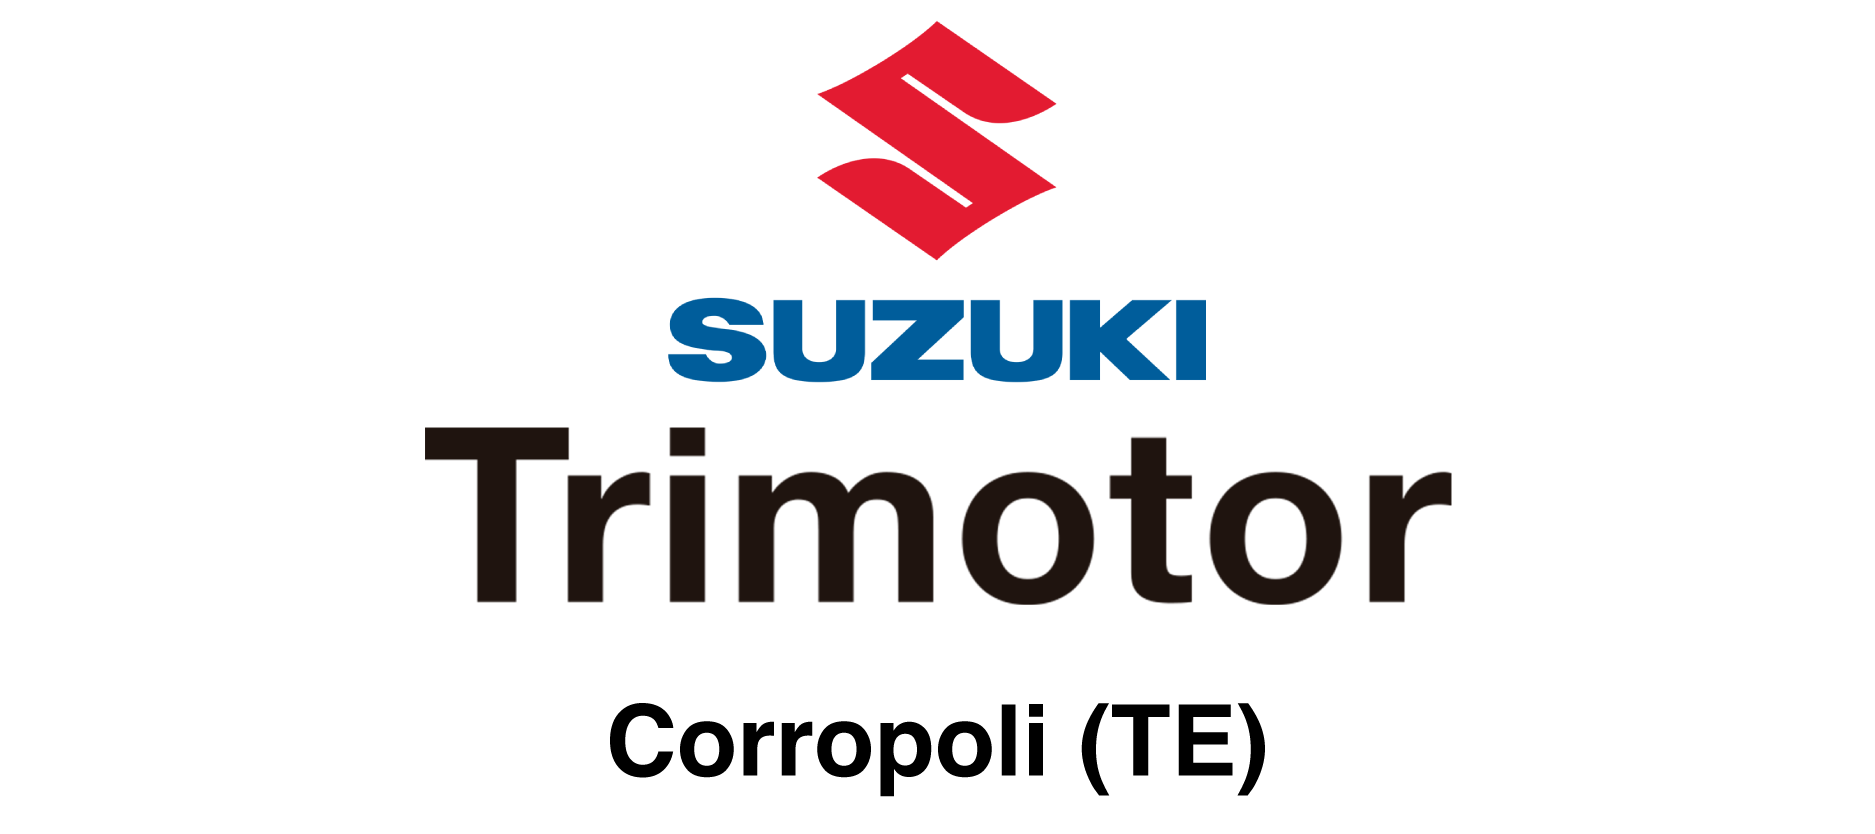 Suzuki Trimotor